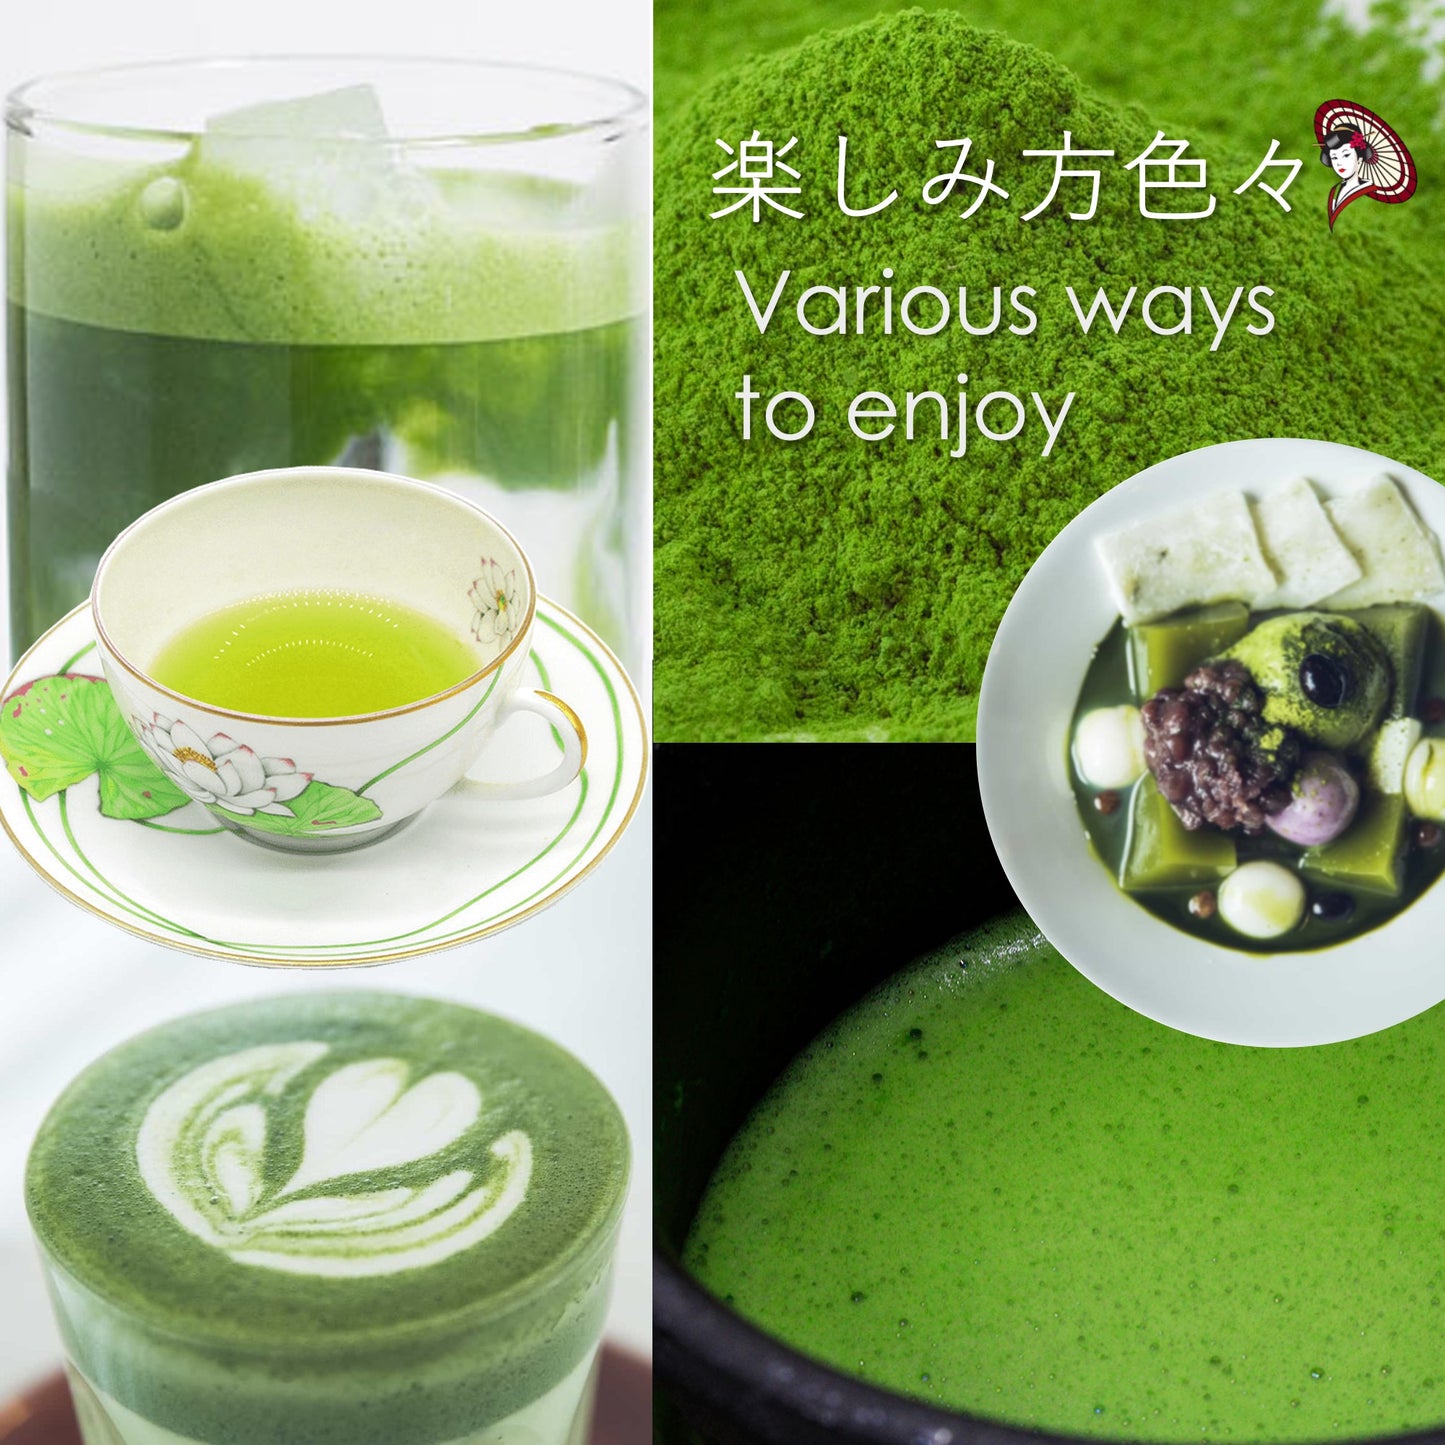 Bulk [Dreaming Matcha (Purple) Japanese Yame Matcha Green tea Powder プレミアムグレード 一番茶 "夢みる抹茶"（紫） [業務用 大容量] 八女 抹茶 粉末 パウダー  1kg / 10kg /20kg